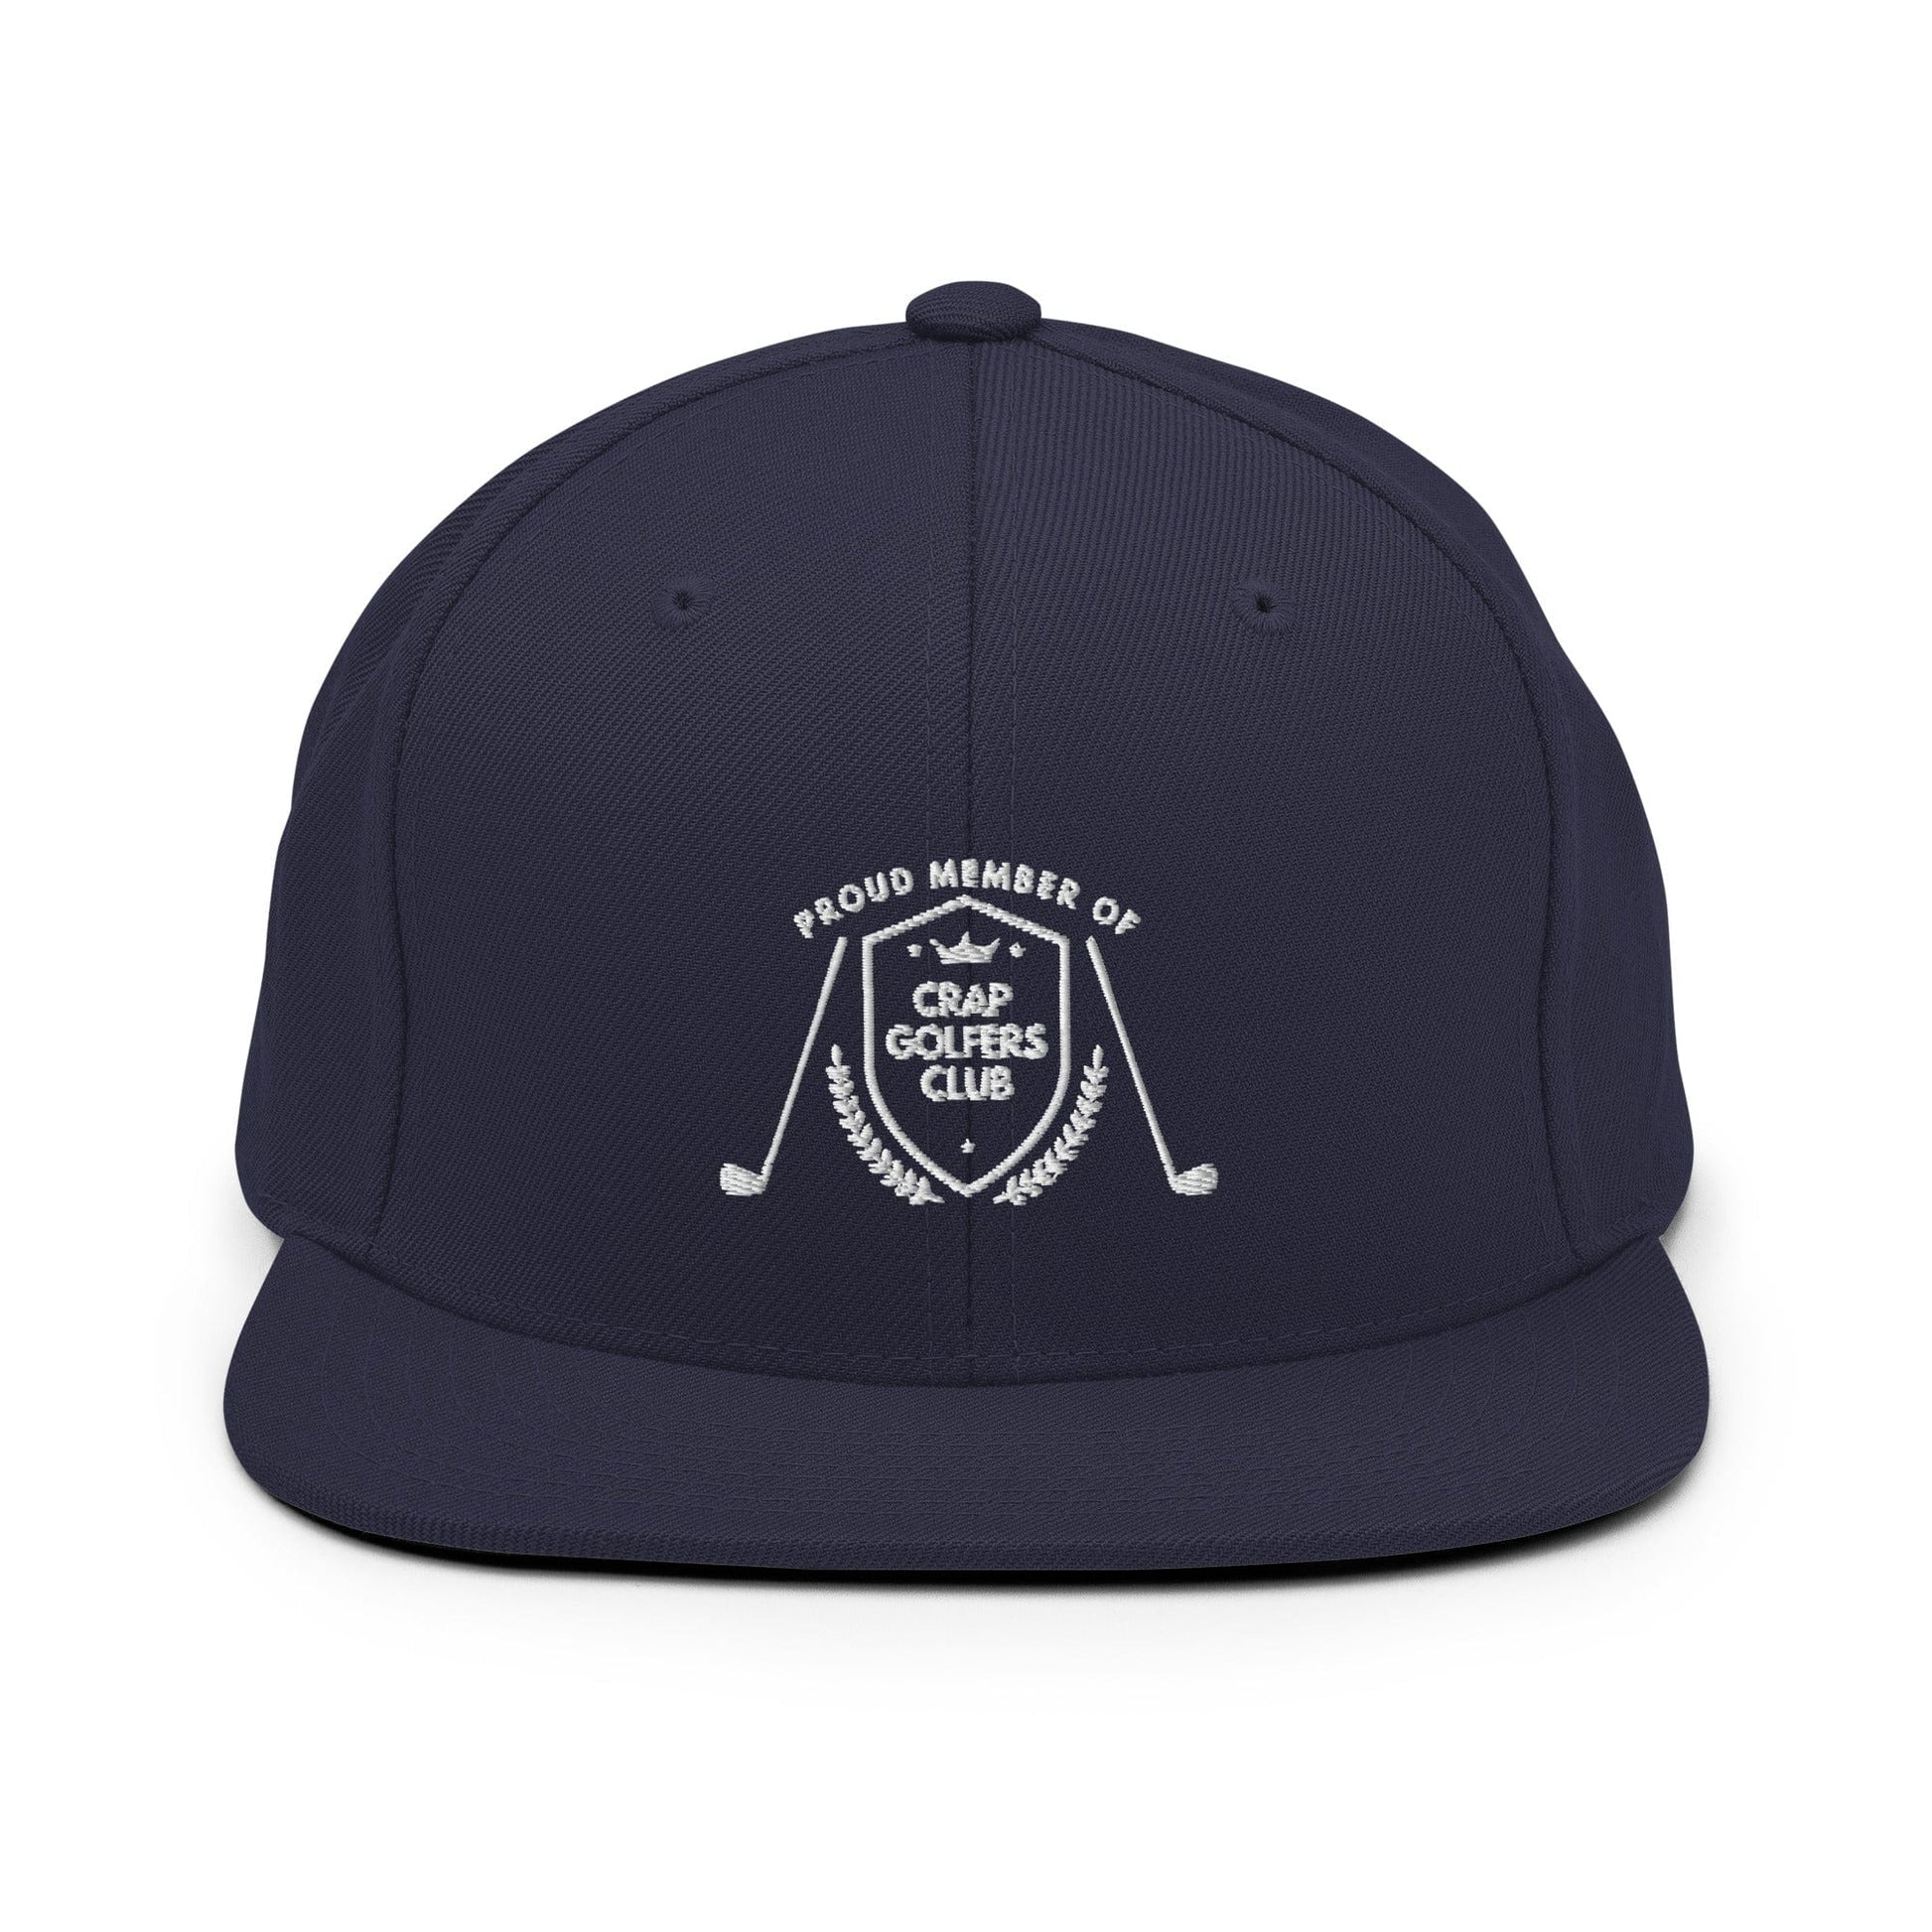 Funny Golfer Gifts  Snapback Hat Navy Crap Golfers Club Snapback Hat